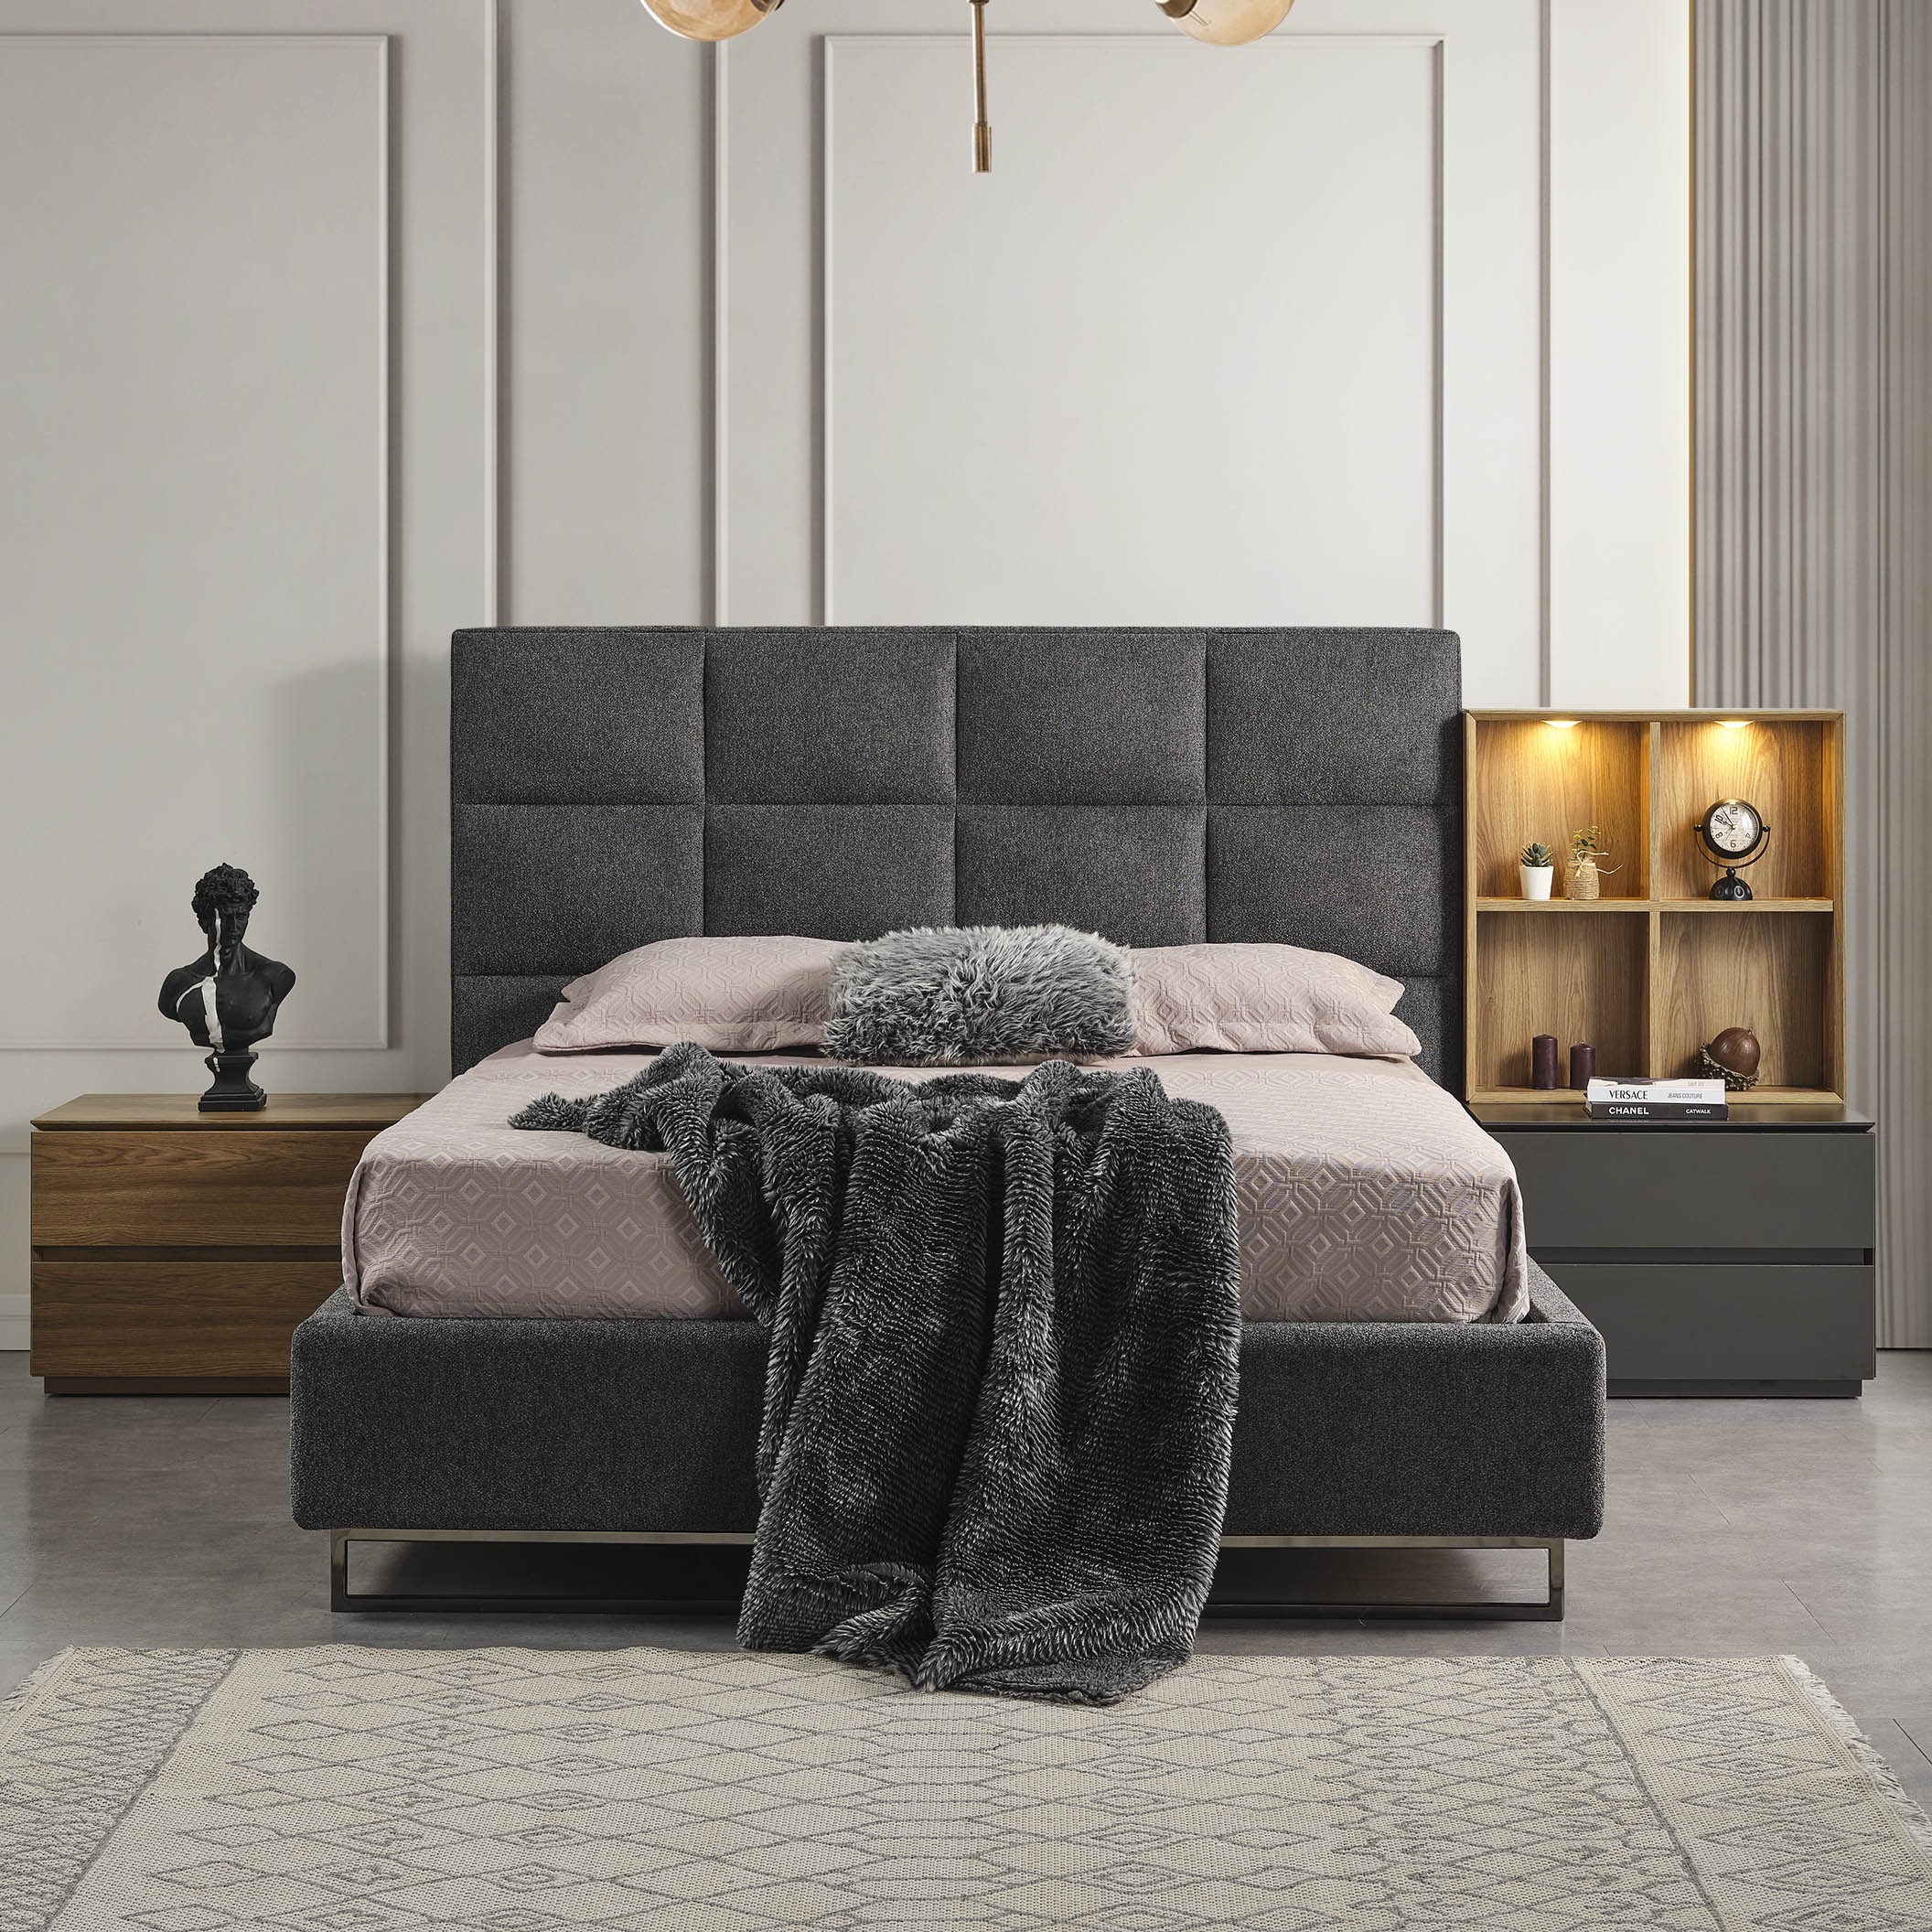 Soft Bed With Storage 180x200 cm